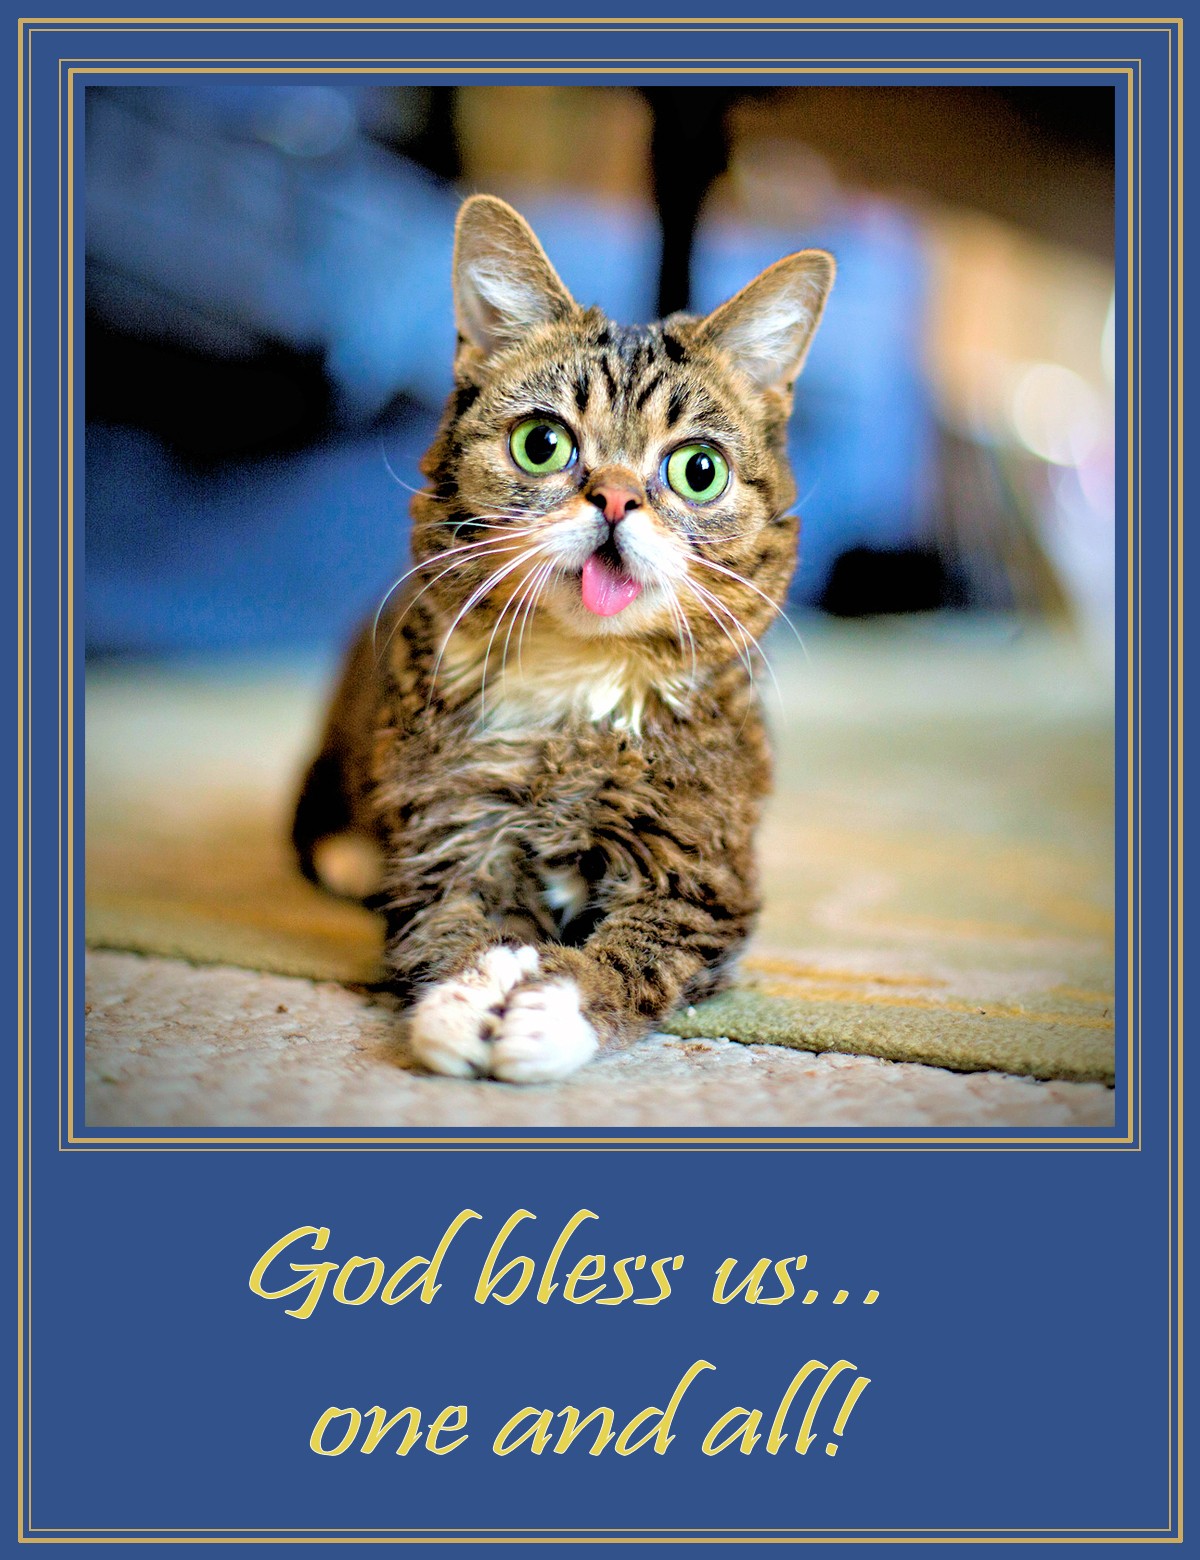 [Image: 00-lil-bub-the-internet-cat-god-bless-us-15-06.jpg]